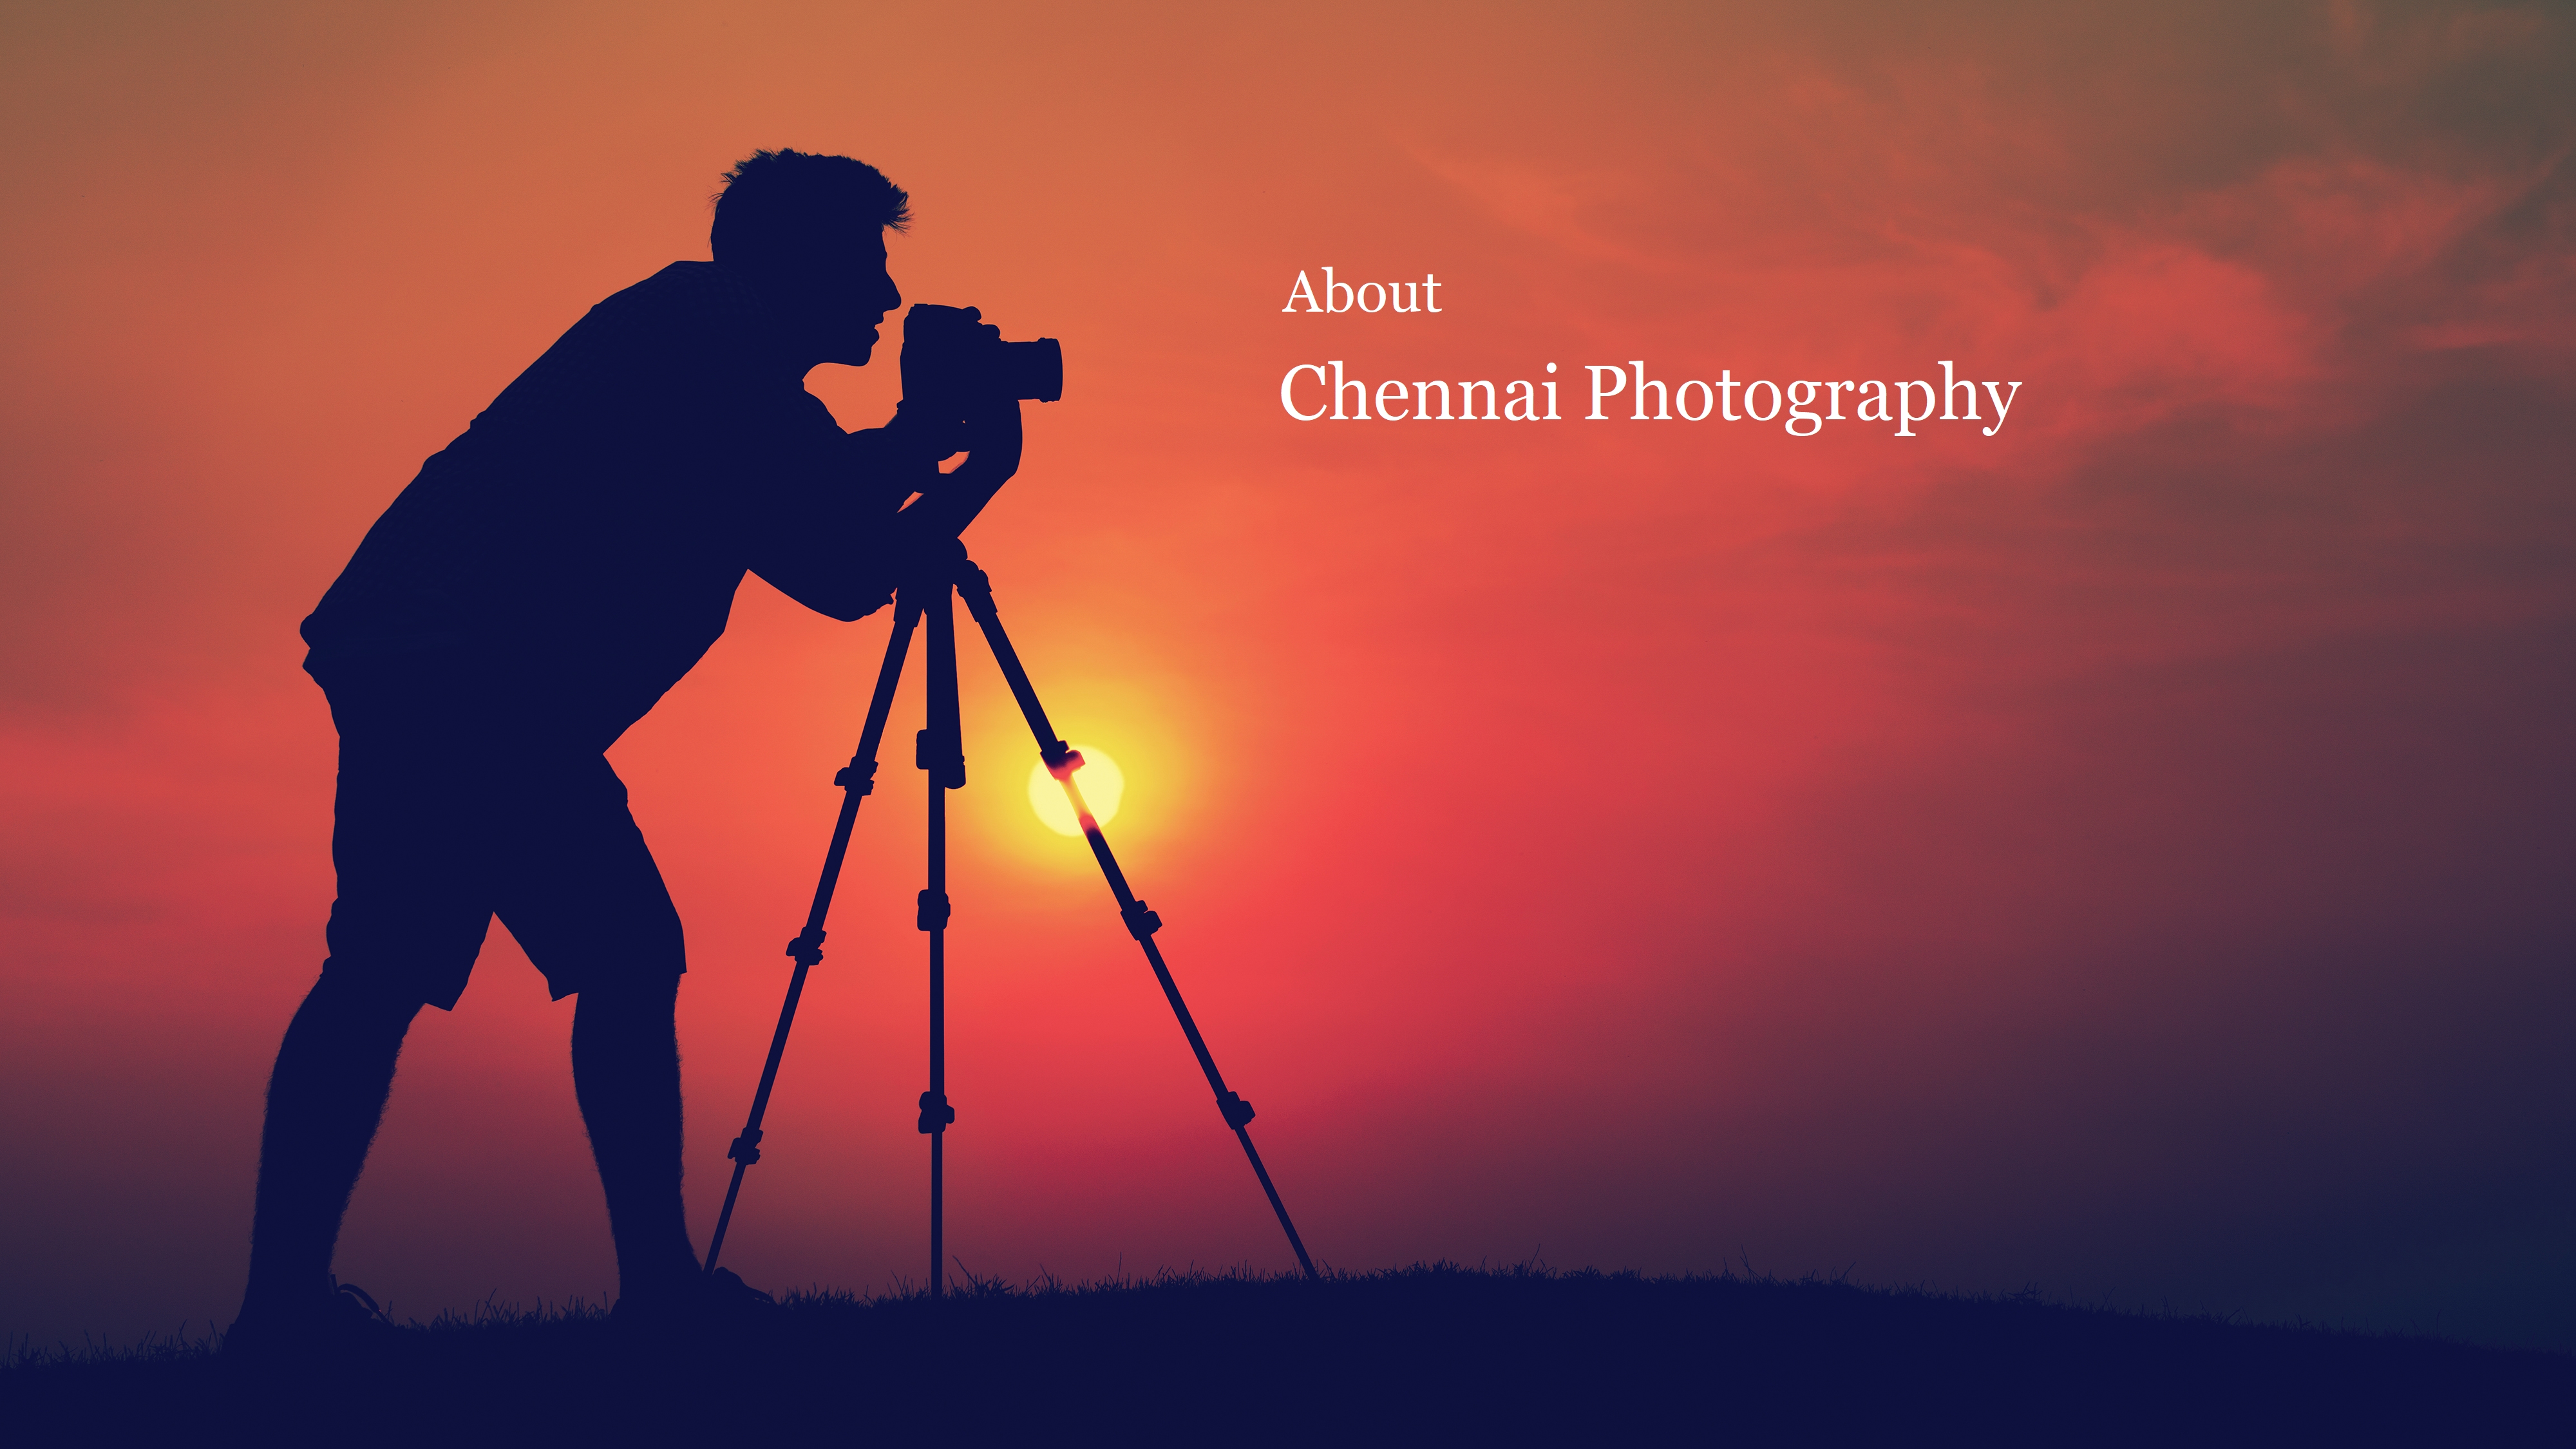 About Chennai Photography